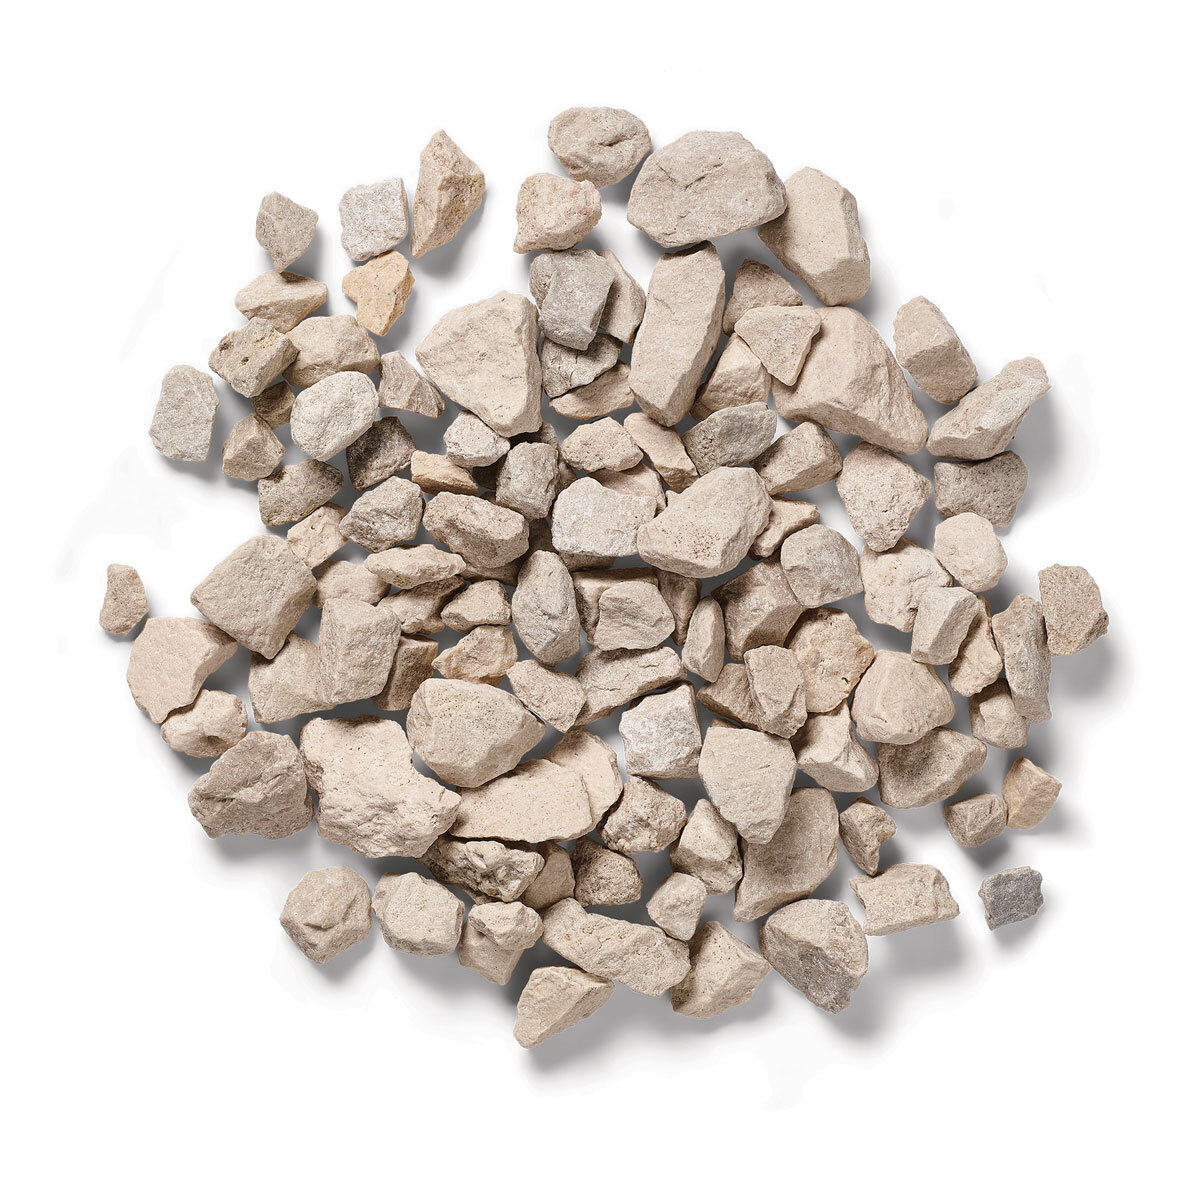 Kelkay 14-22mm Cotswold Stone Chippings Aggregate Bulk Bag - Approx 750kg